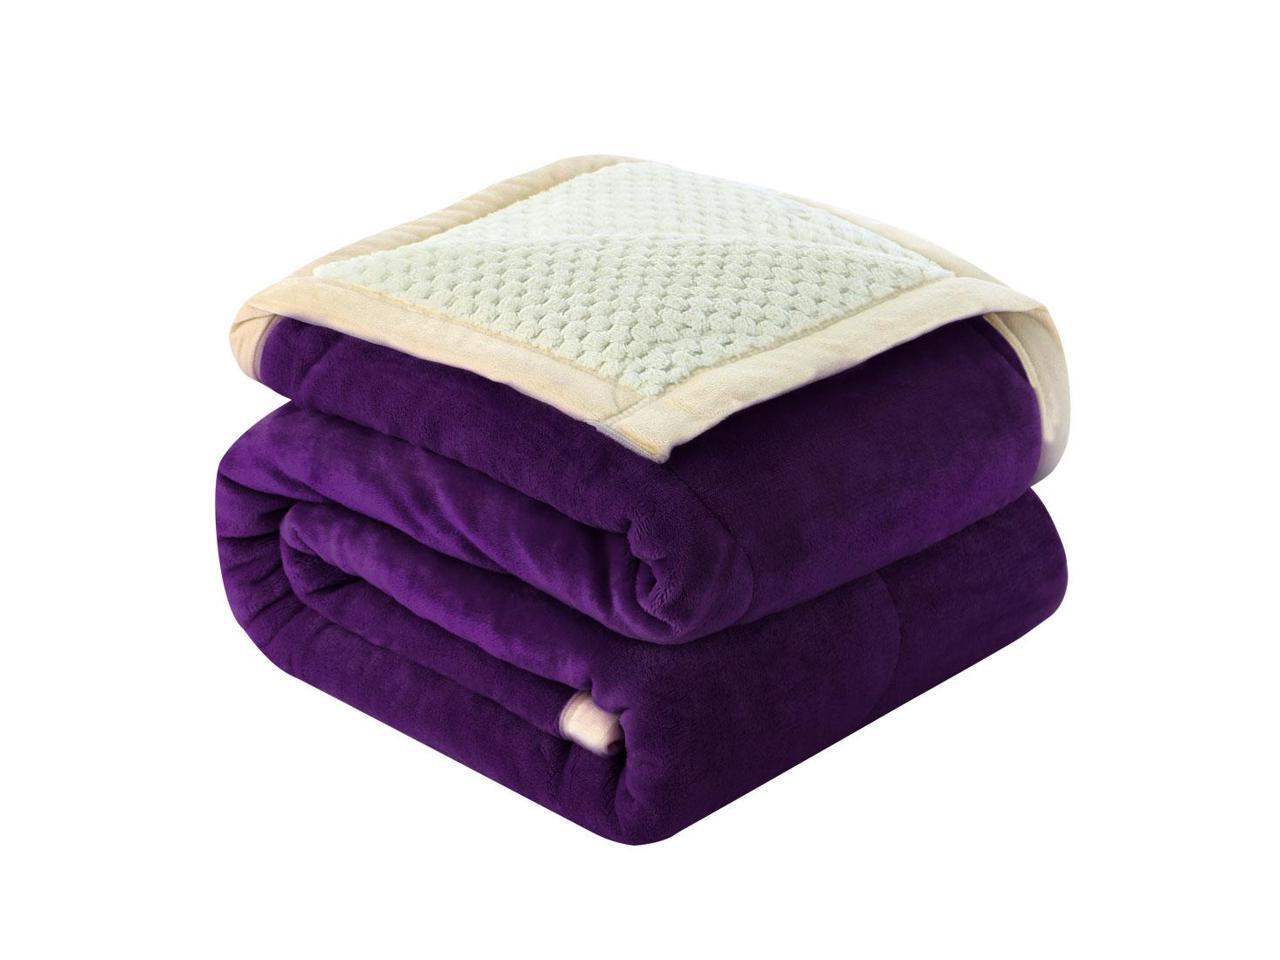 Reversible Thick Fleece Blanket Queen Size,3 Layers Microfiber Plush ...